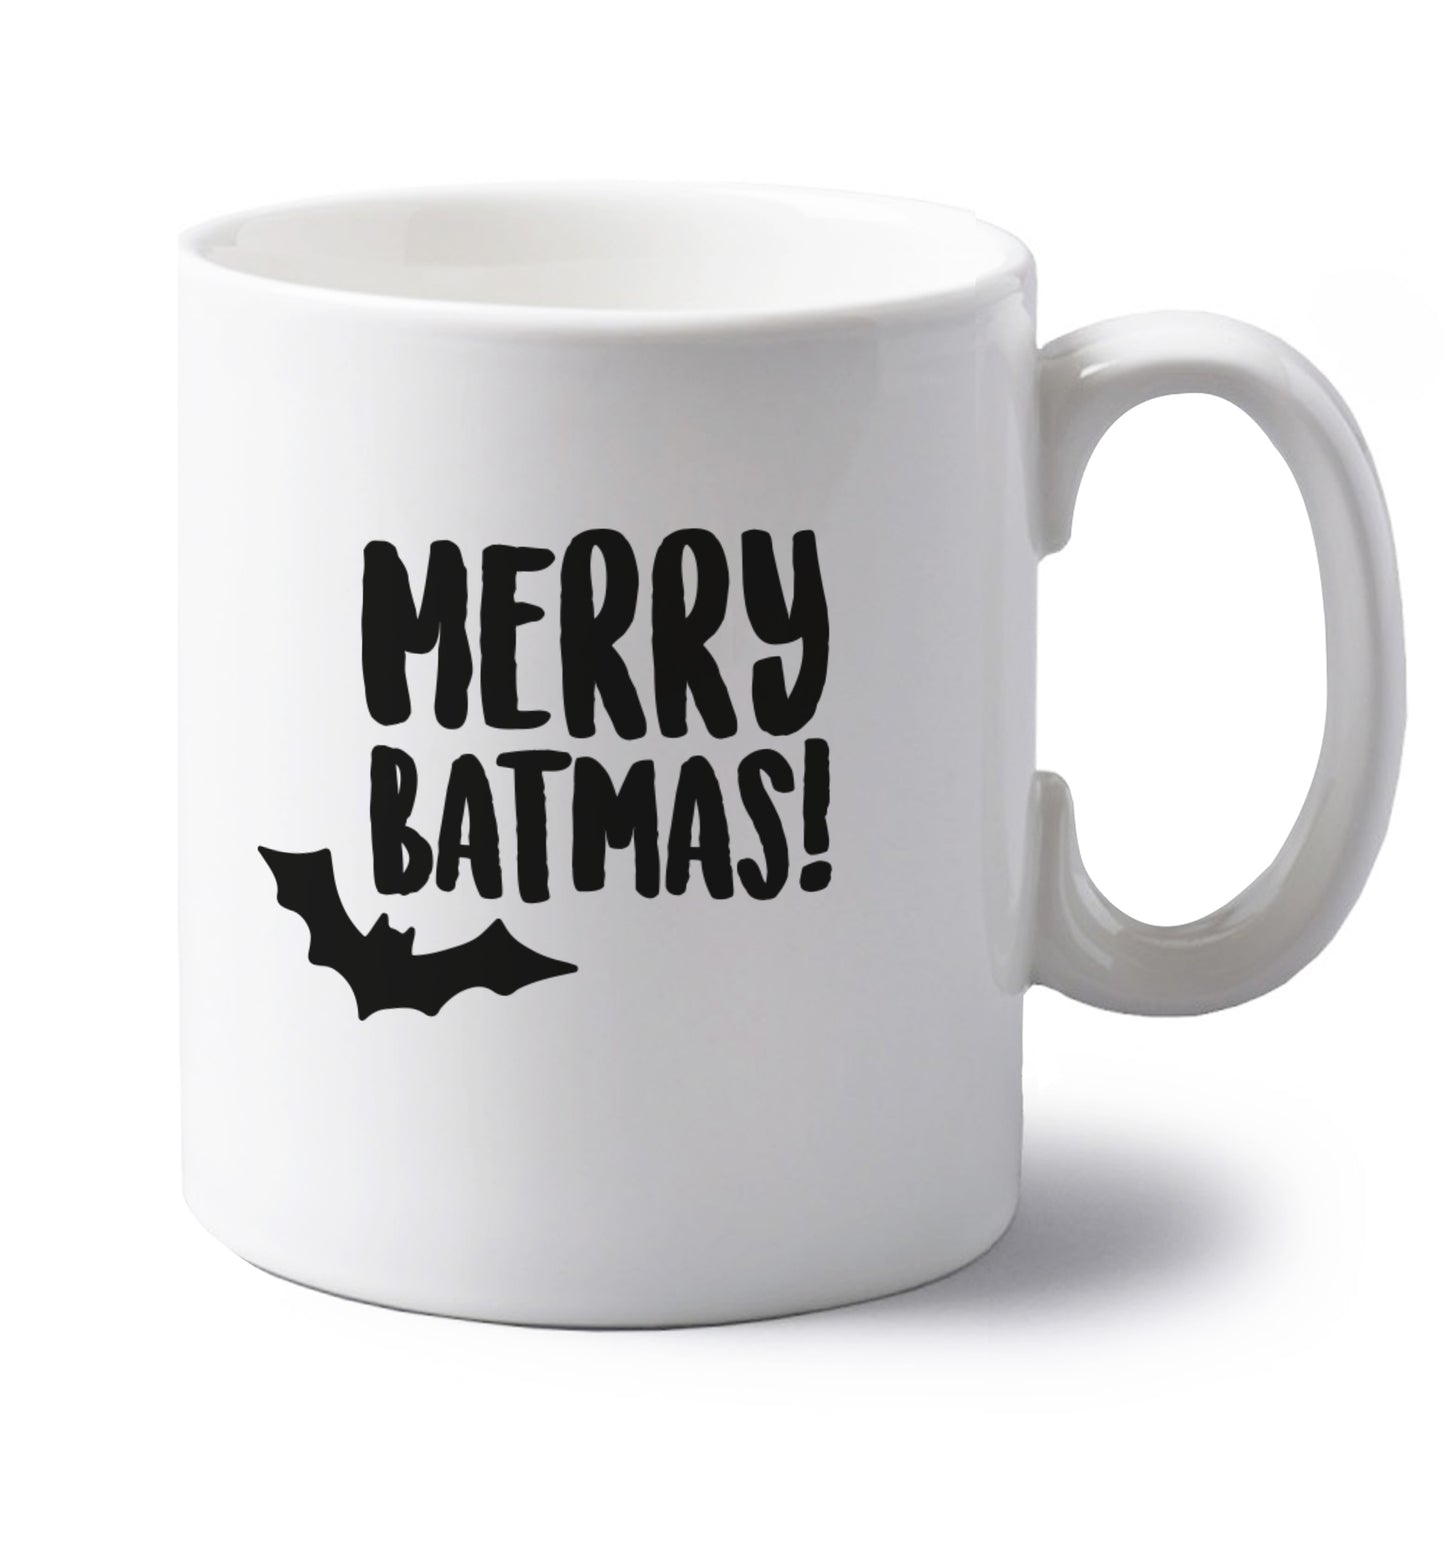 Merry Batmas left handed white ceramic mug 